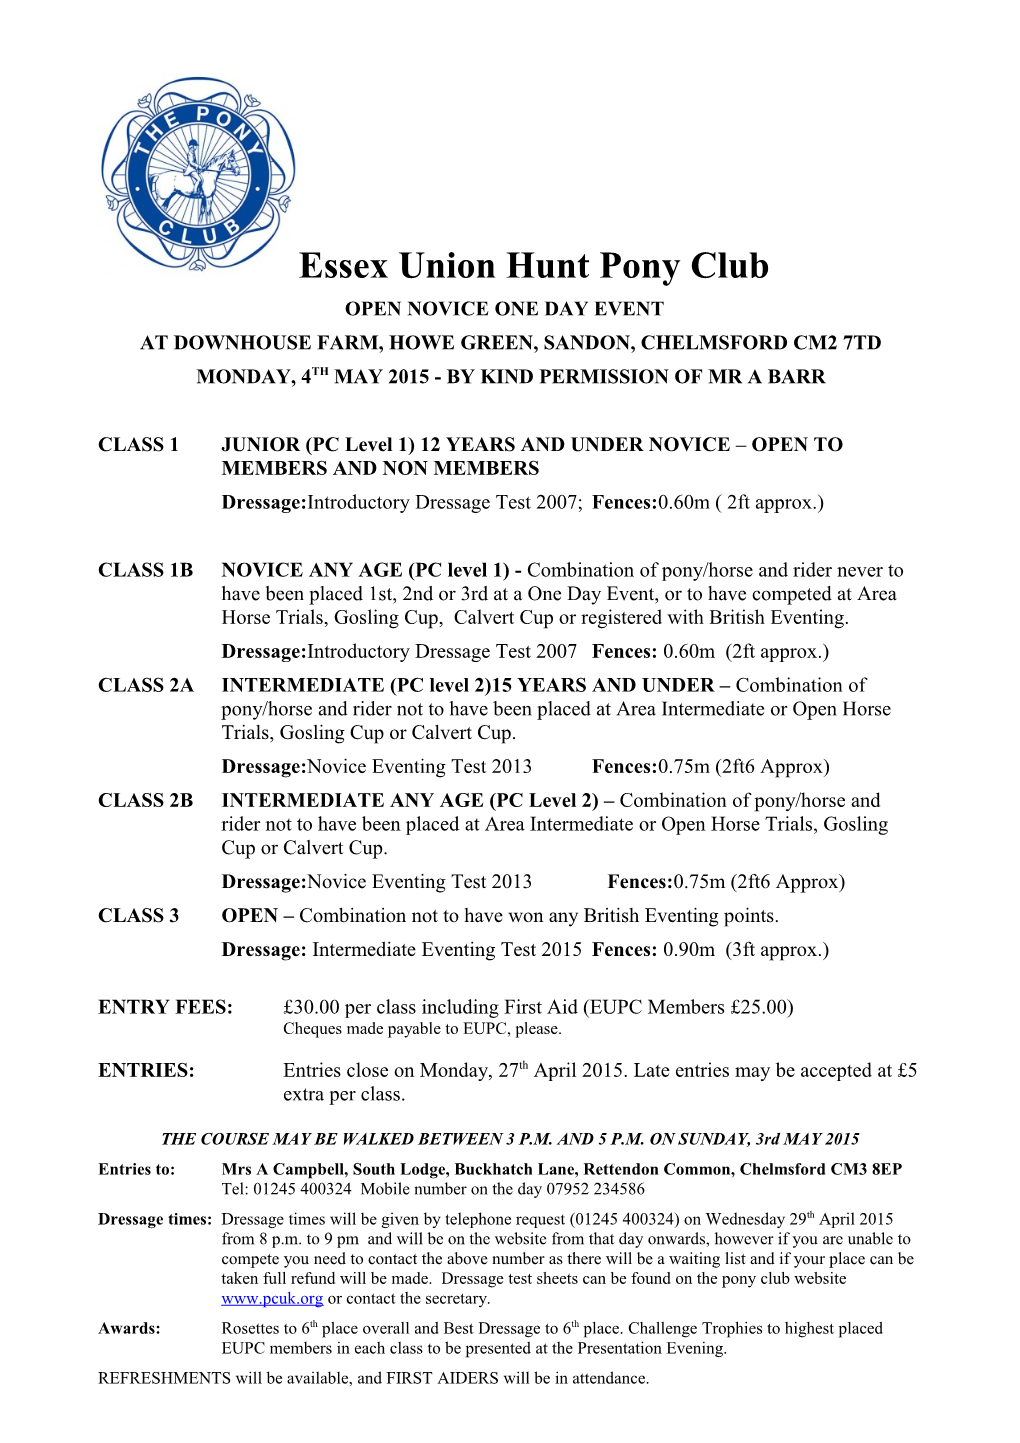 Essex Union Branch of the Pony Club